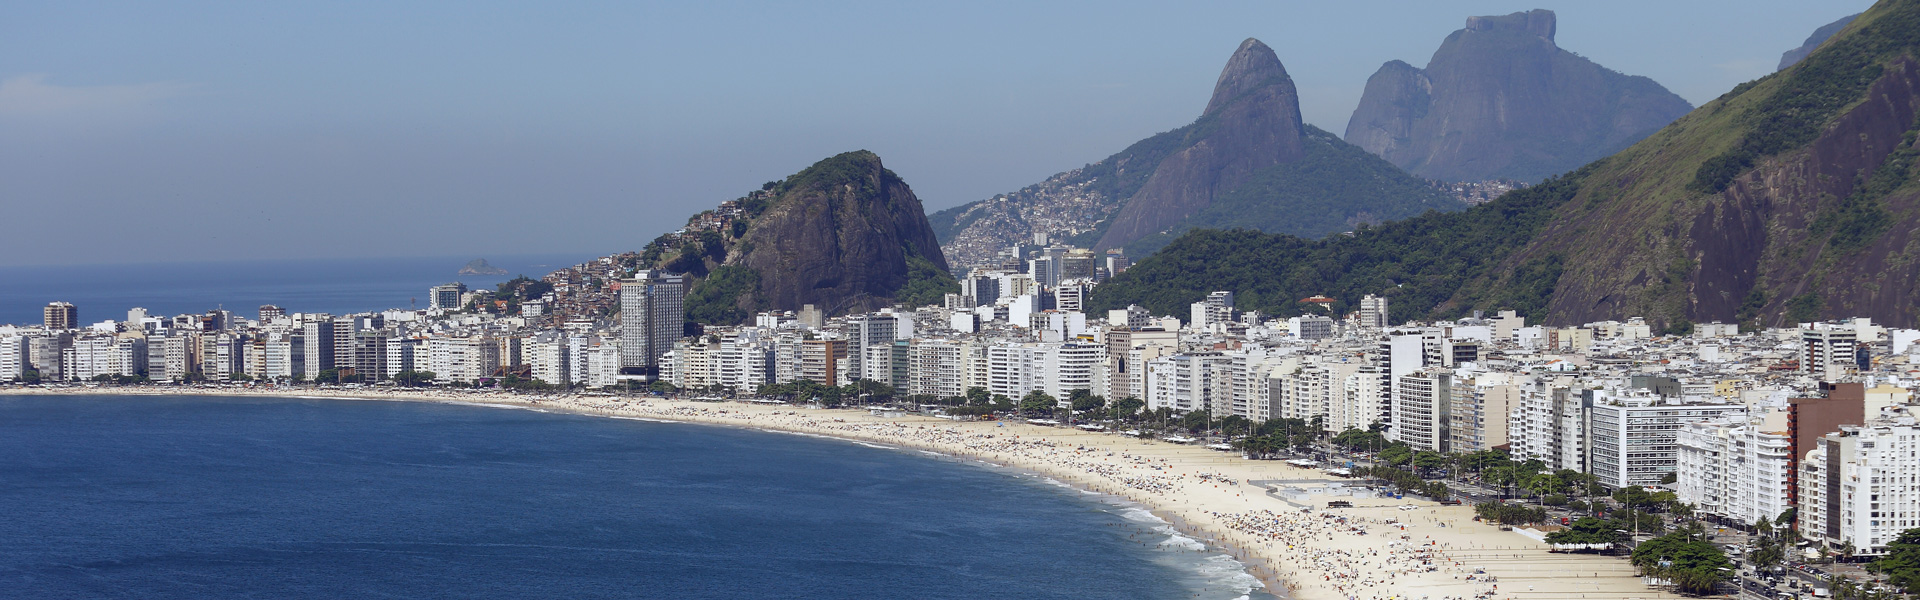 bigstock-Copacabana-beach-Rio-de-Janei-58946735_1920x600